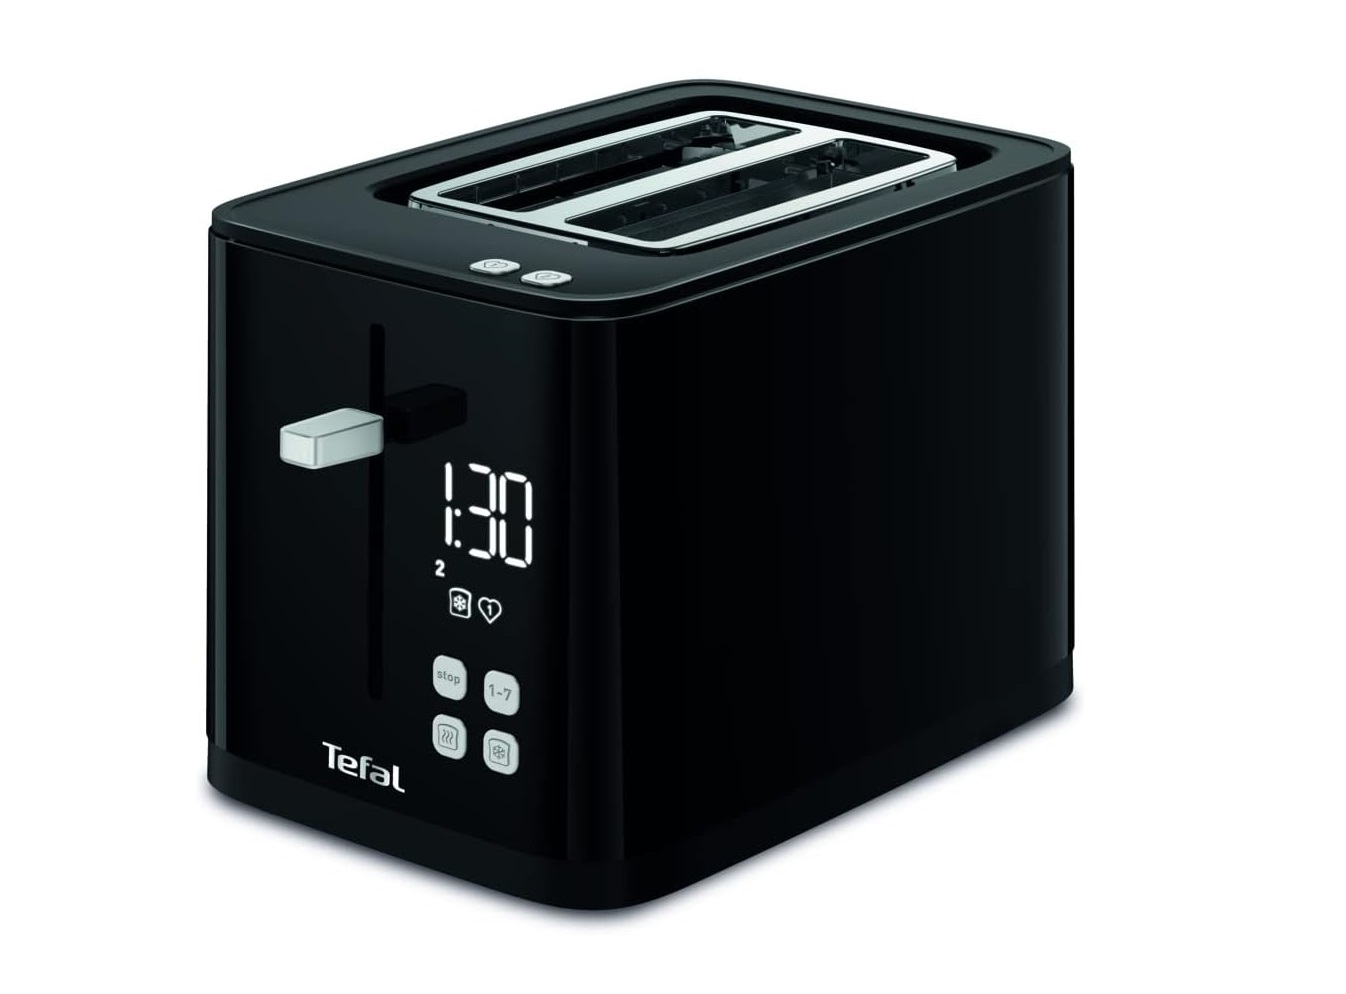 Tefal Smart’n Light 2 Slice Digital Toaster, Black - TT640840 